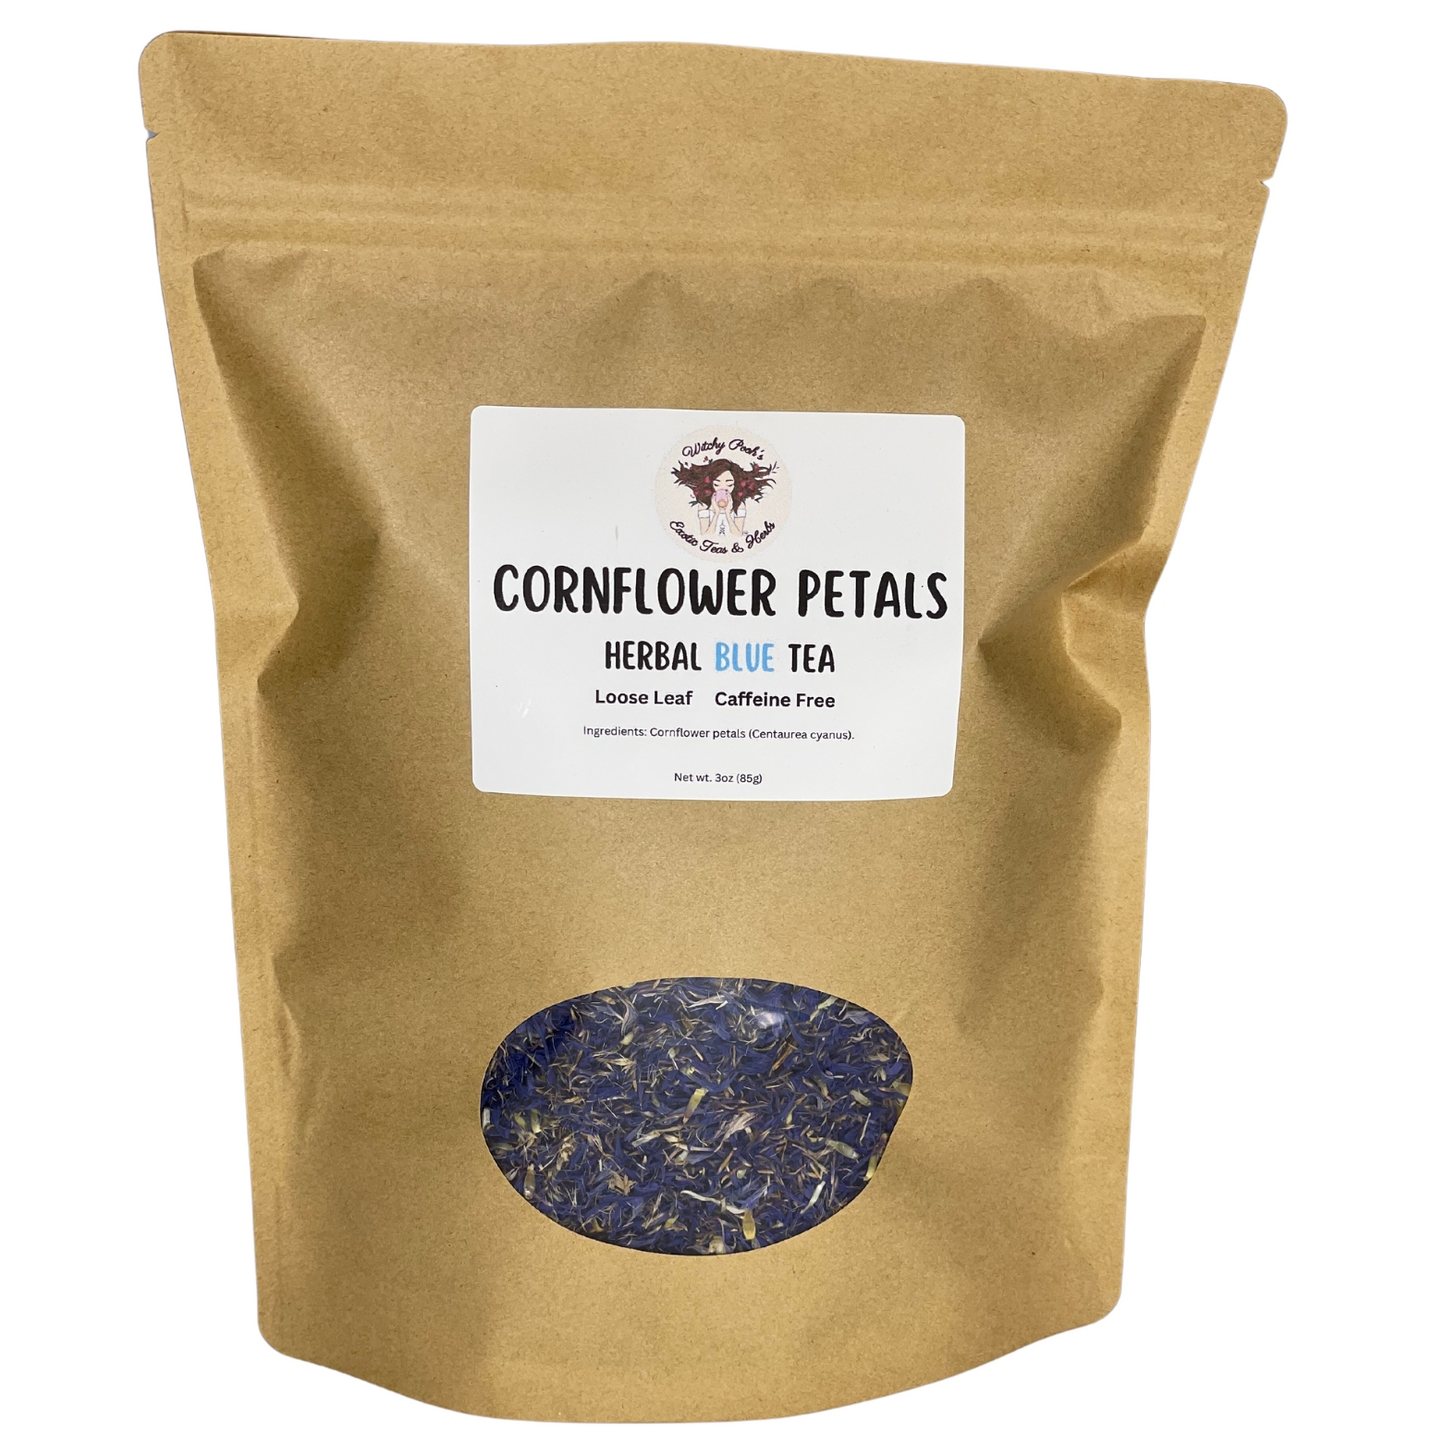 Witchy Pooh's Cornflowers Petals Loose Leaf Herbal Blue Tea, Caffeine Free